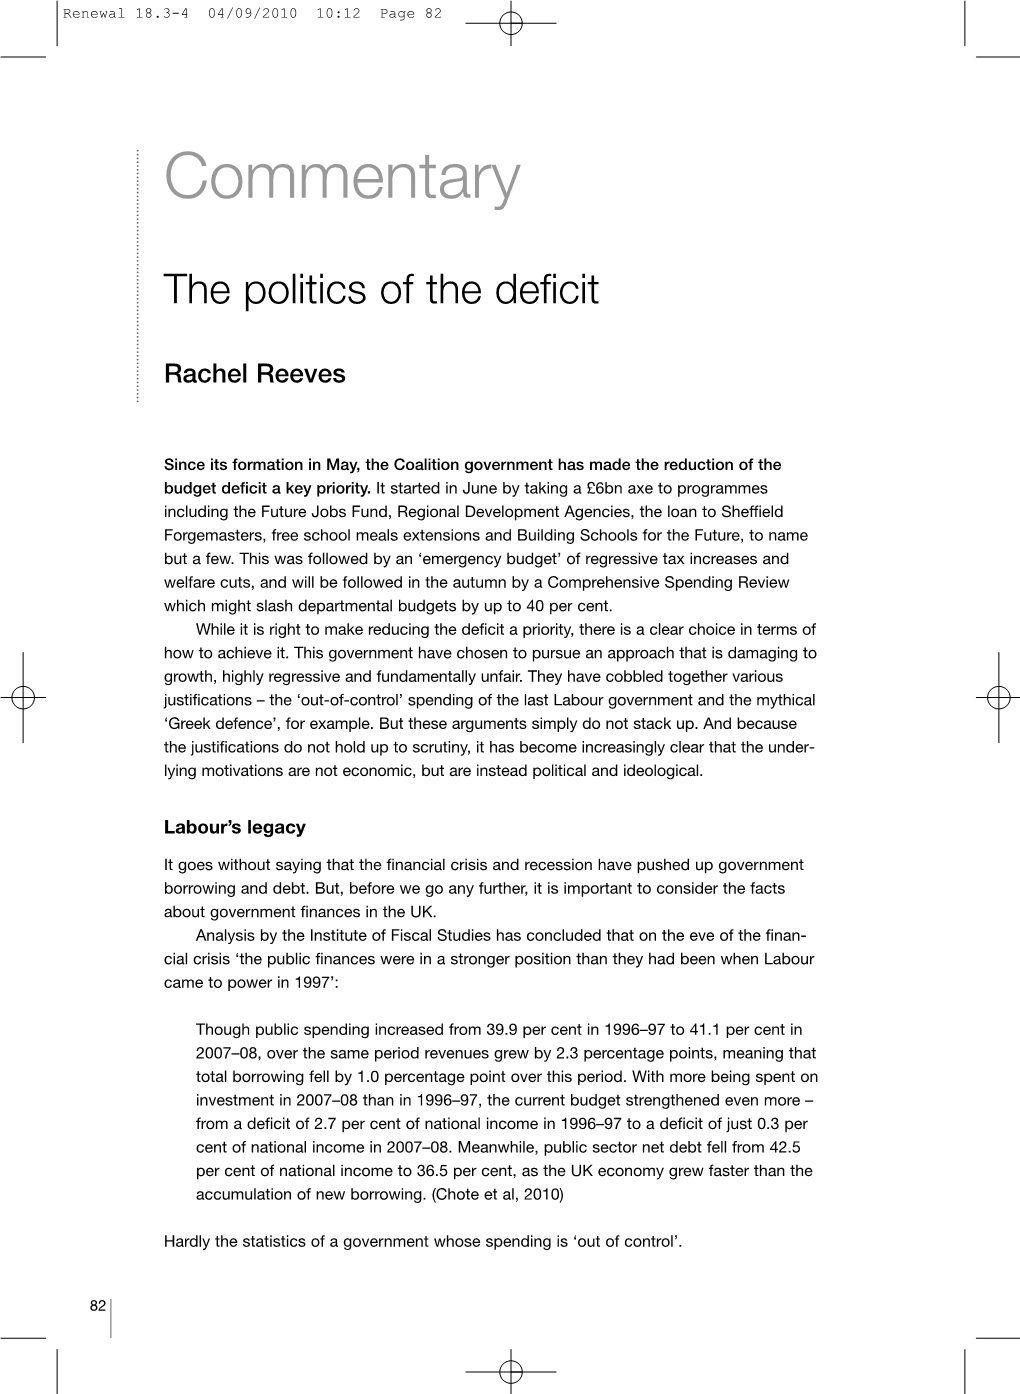 Rachel Reeves, the Politics of the Deficit